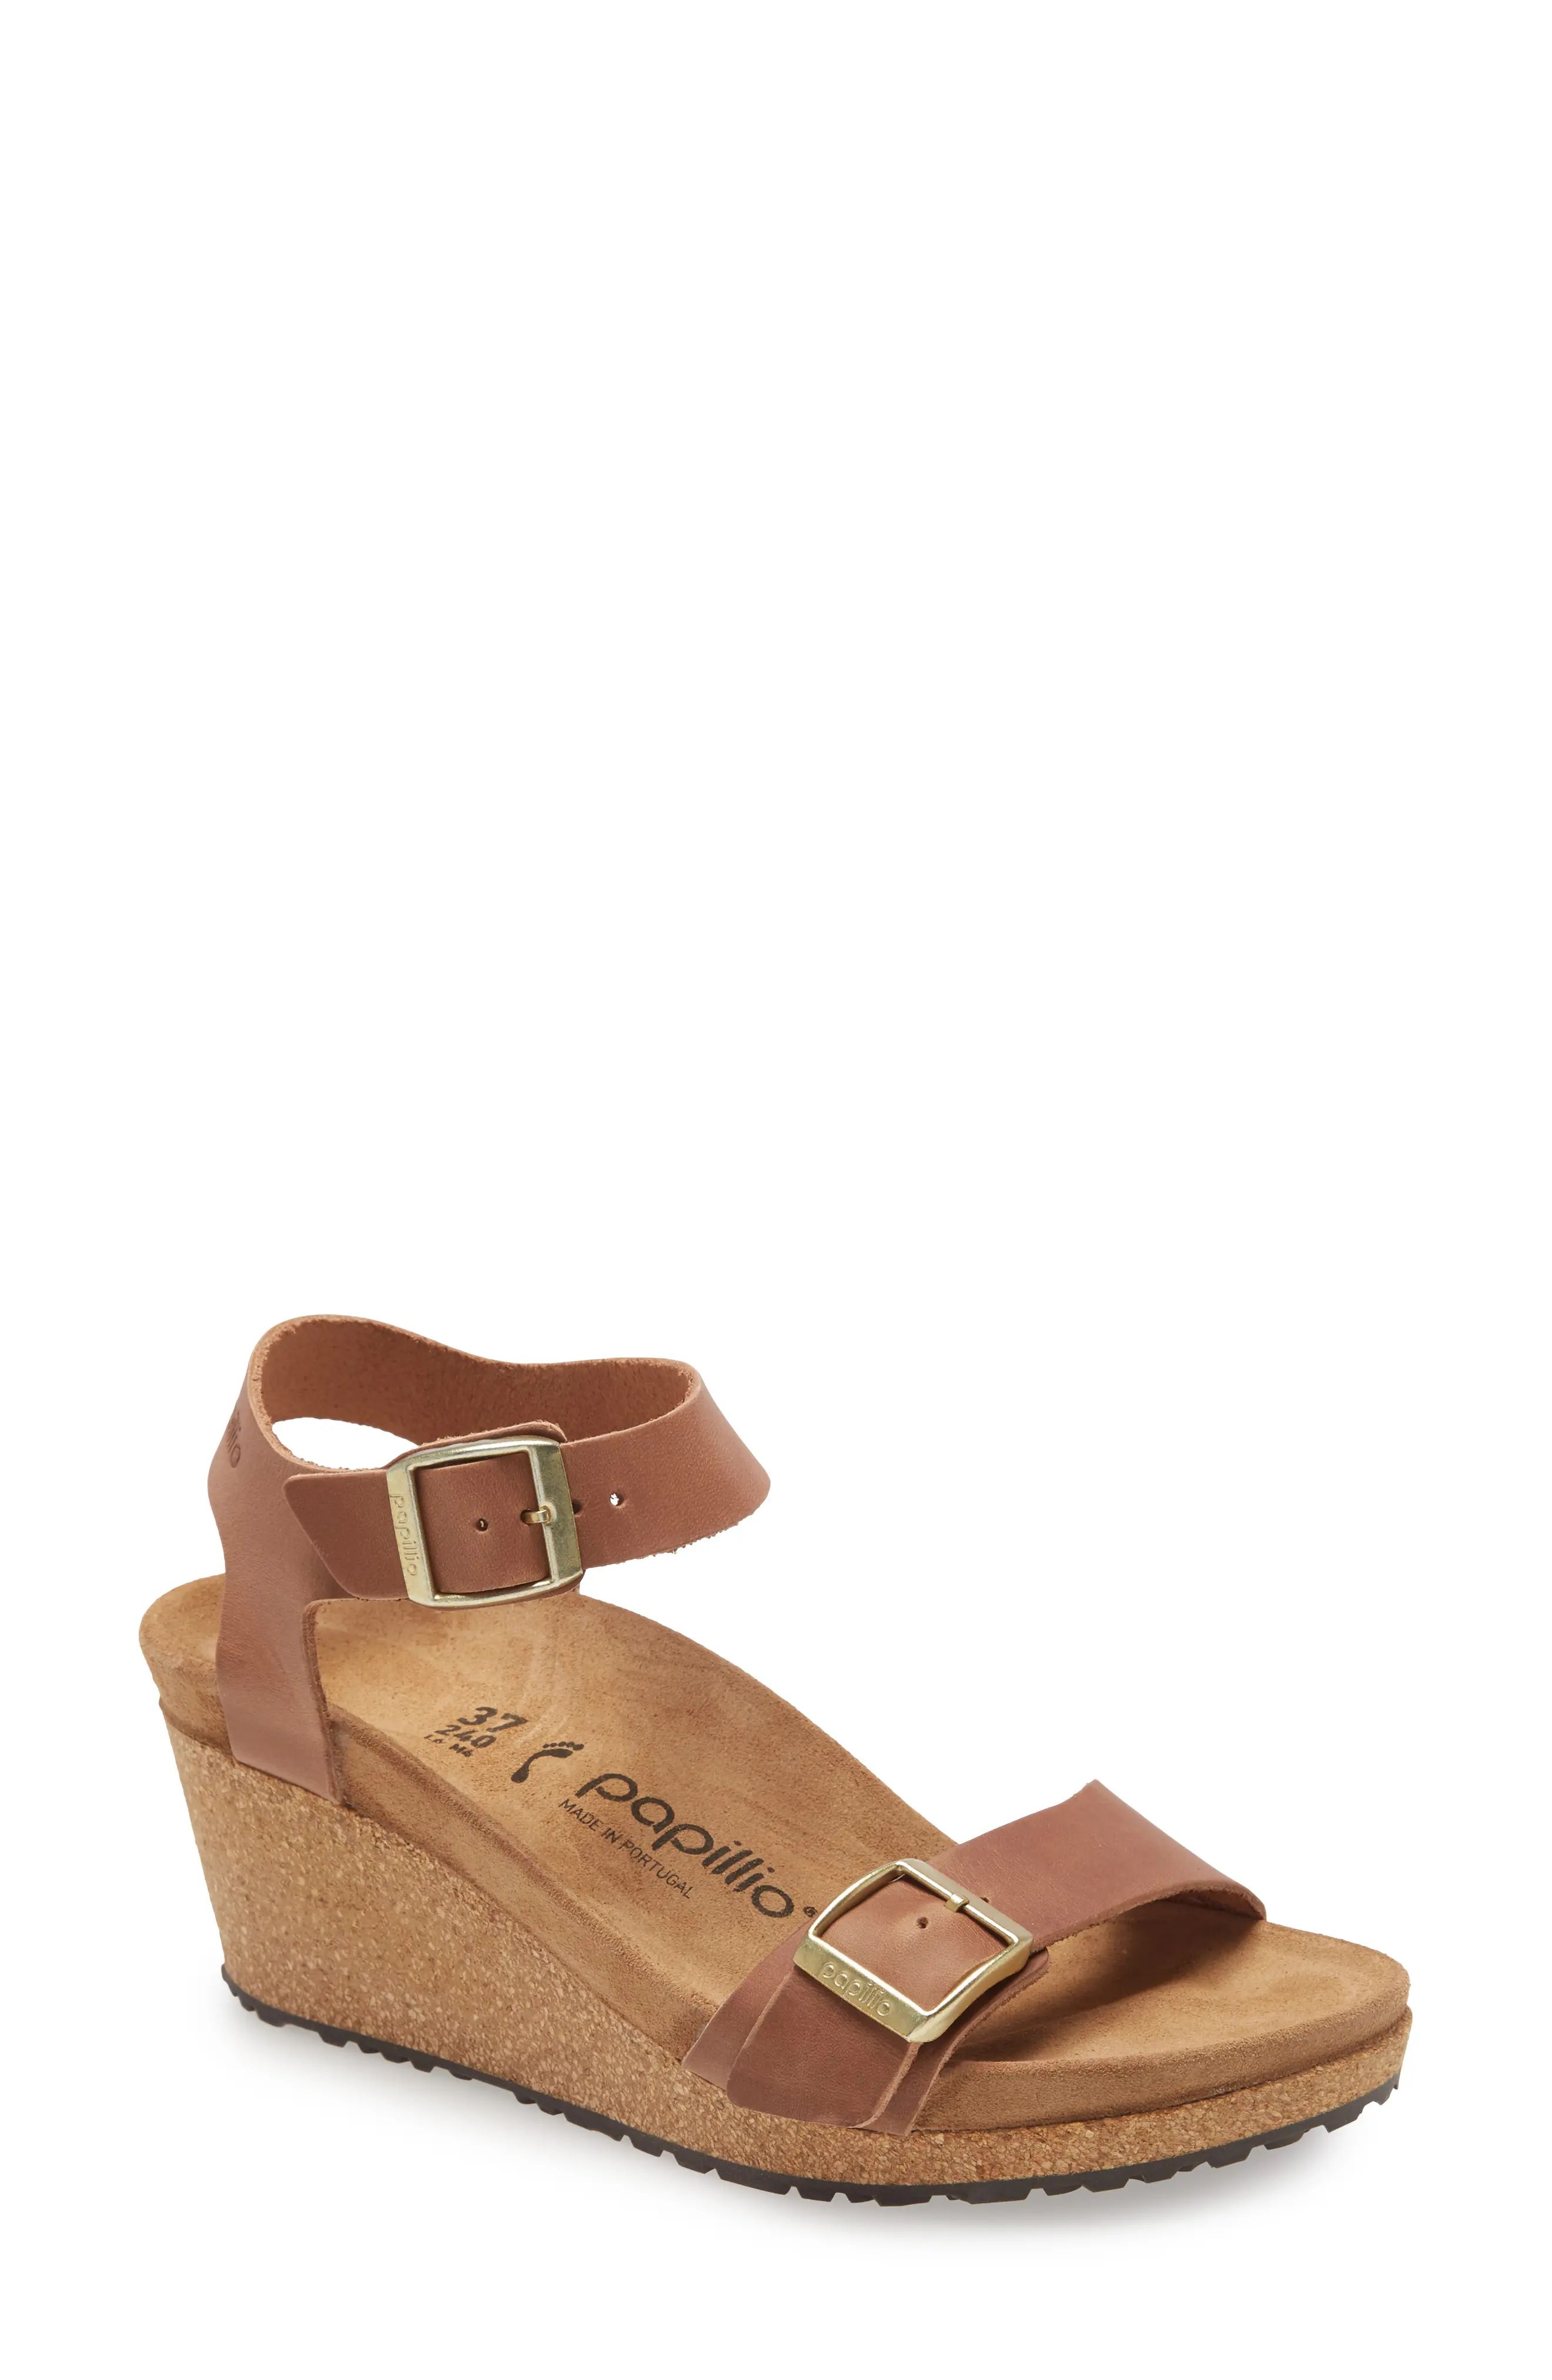 Women's Papillio By Birkenstock Soley Wedge Sandal, Size 5-5.5US / 36EU B - Brown | Nordstrom